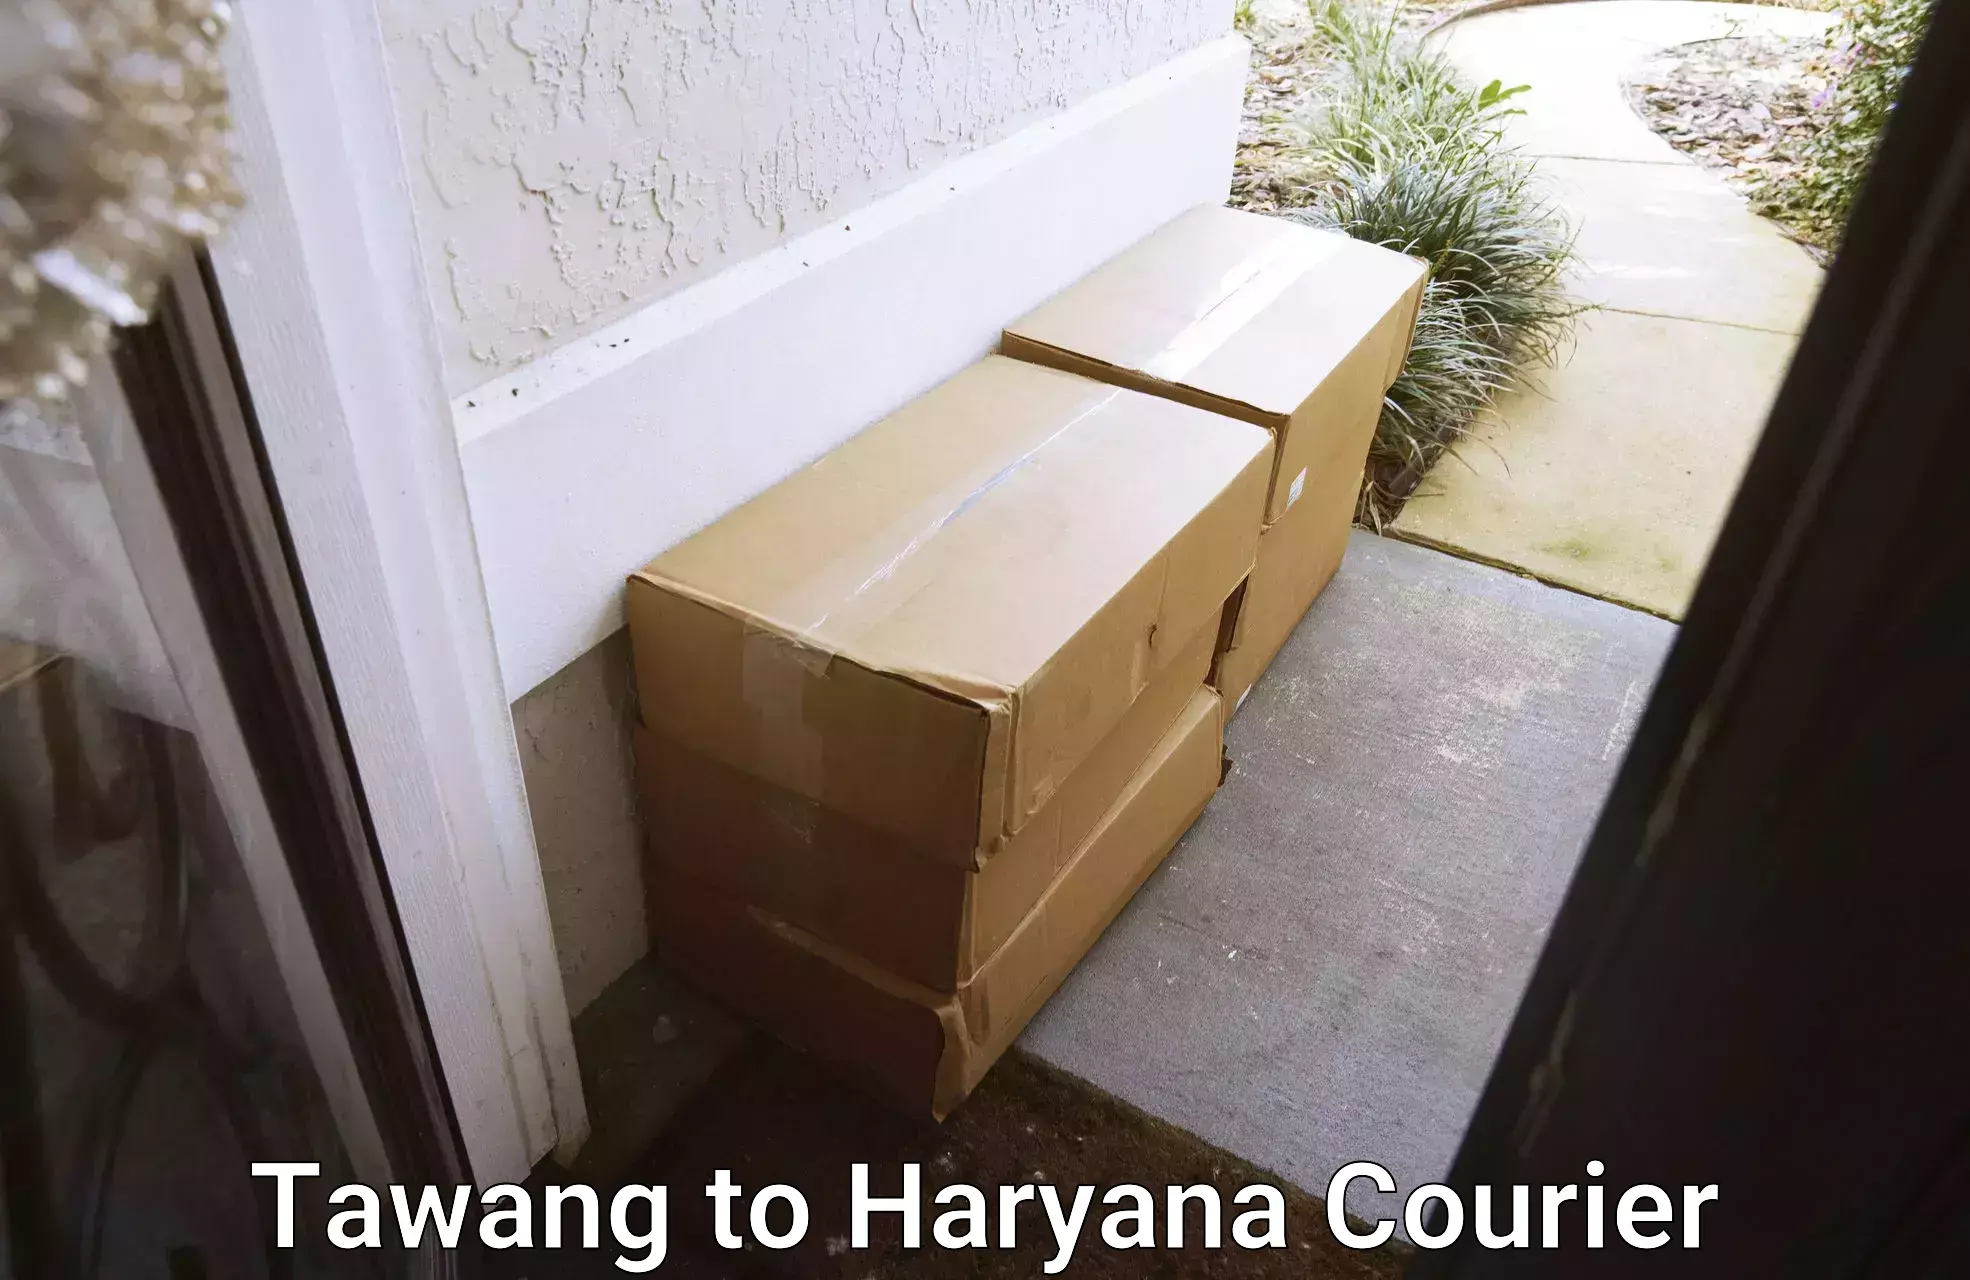 High-performance logistics Tawang to Haryana